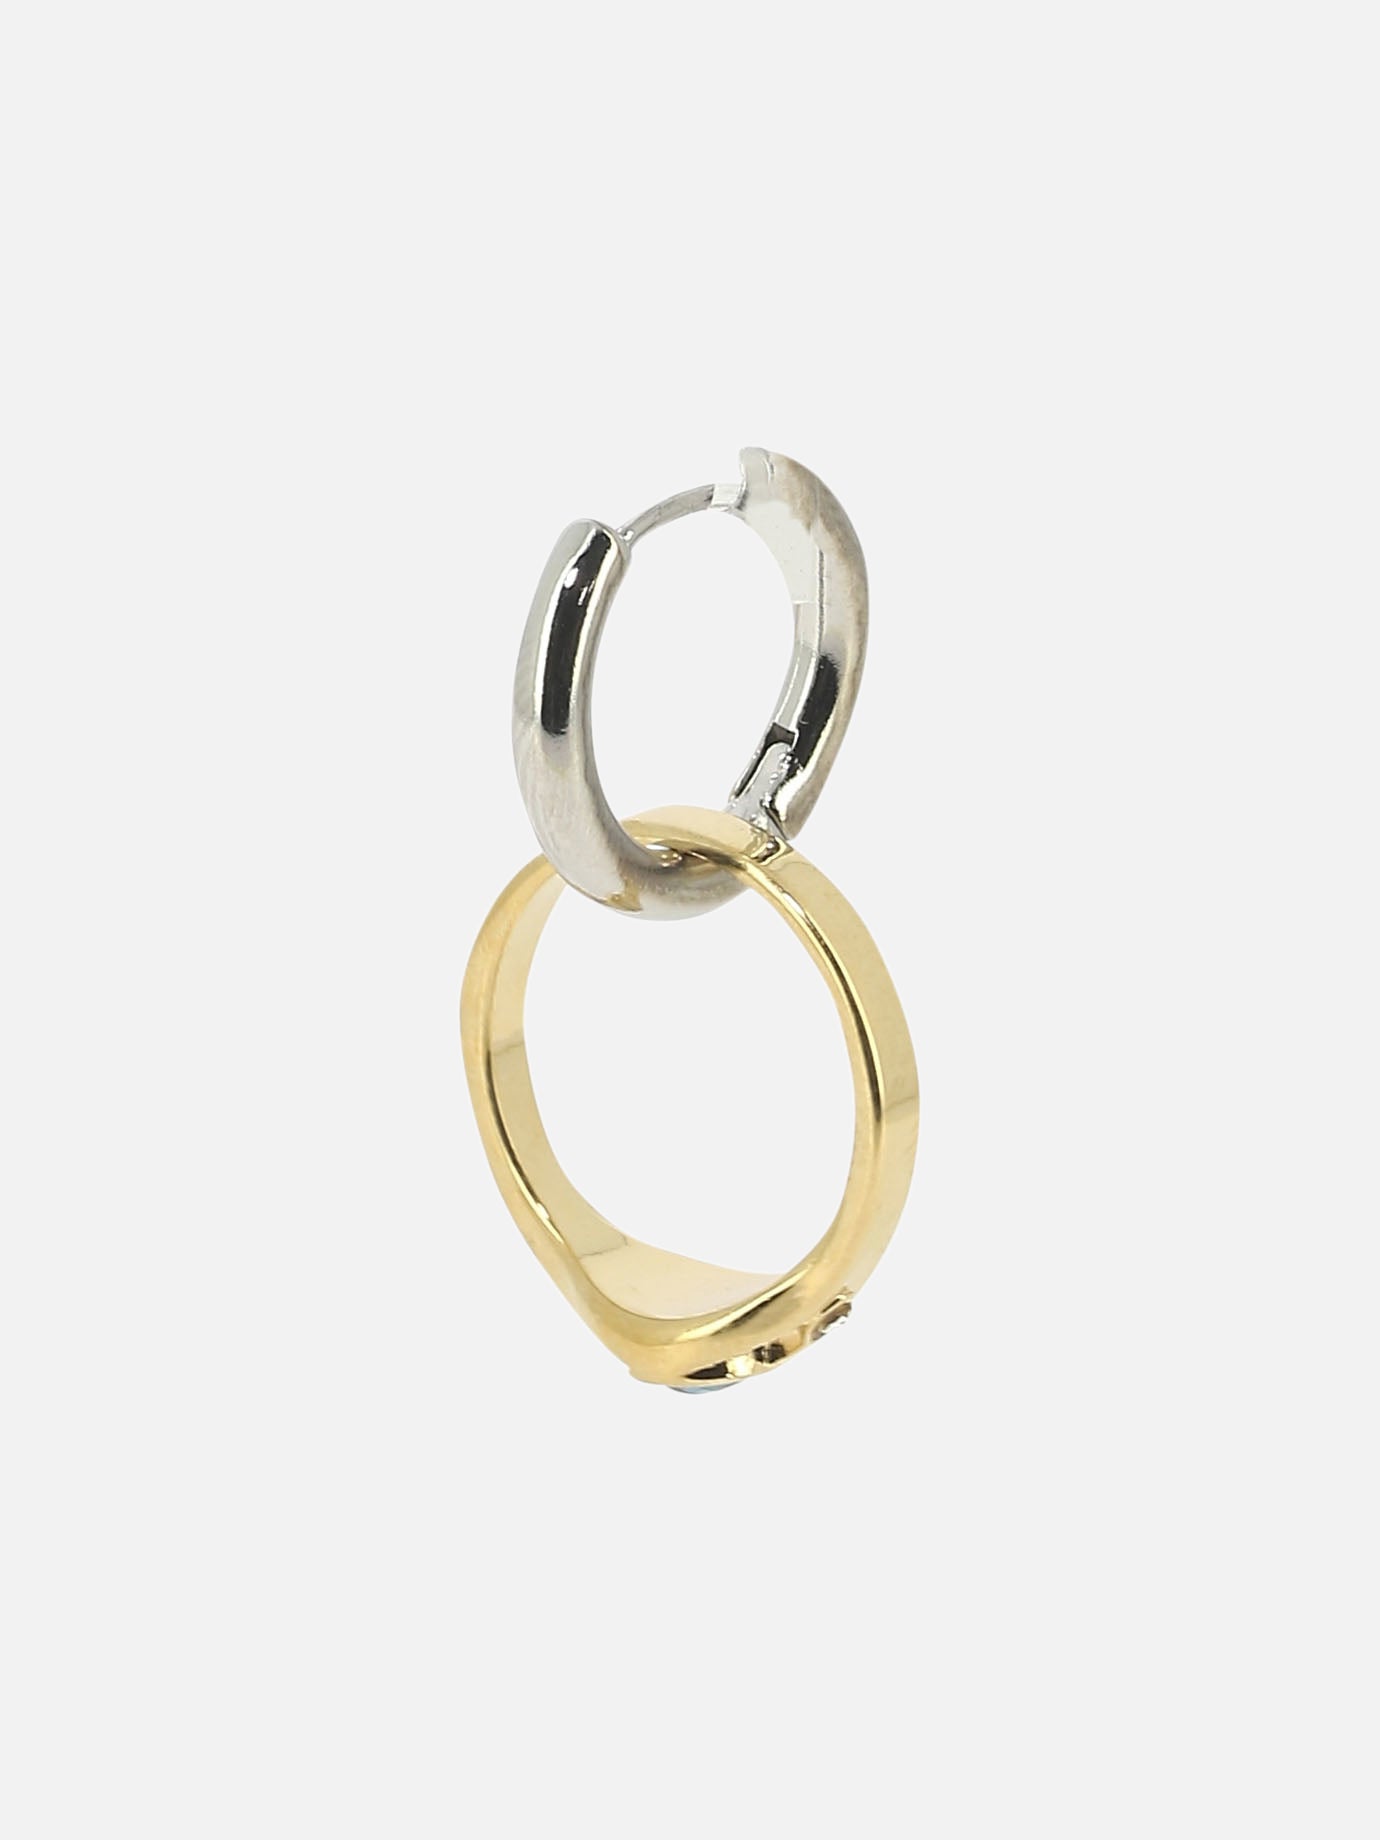 Asymmetric earrings with rings